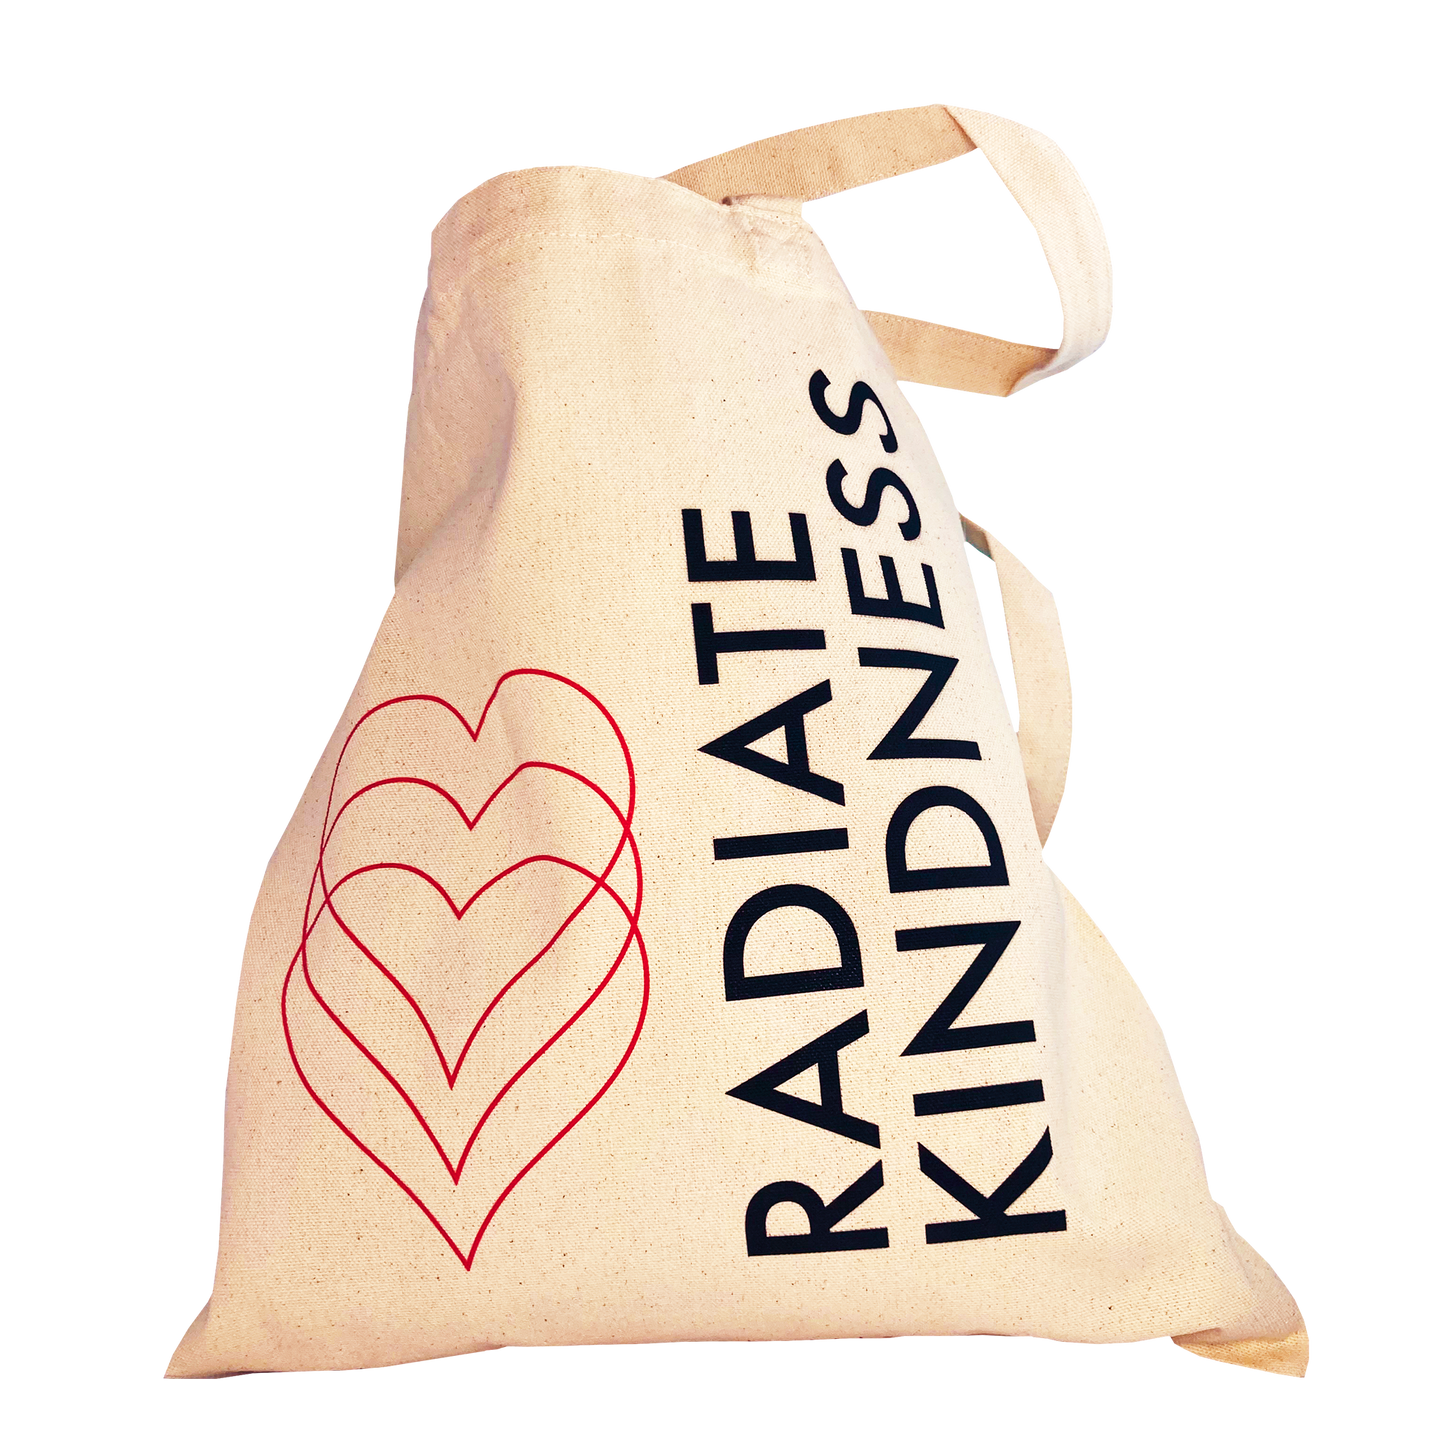 Radiate Kindness Eco Canvas Tote